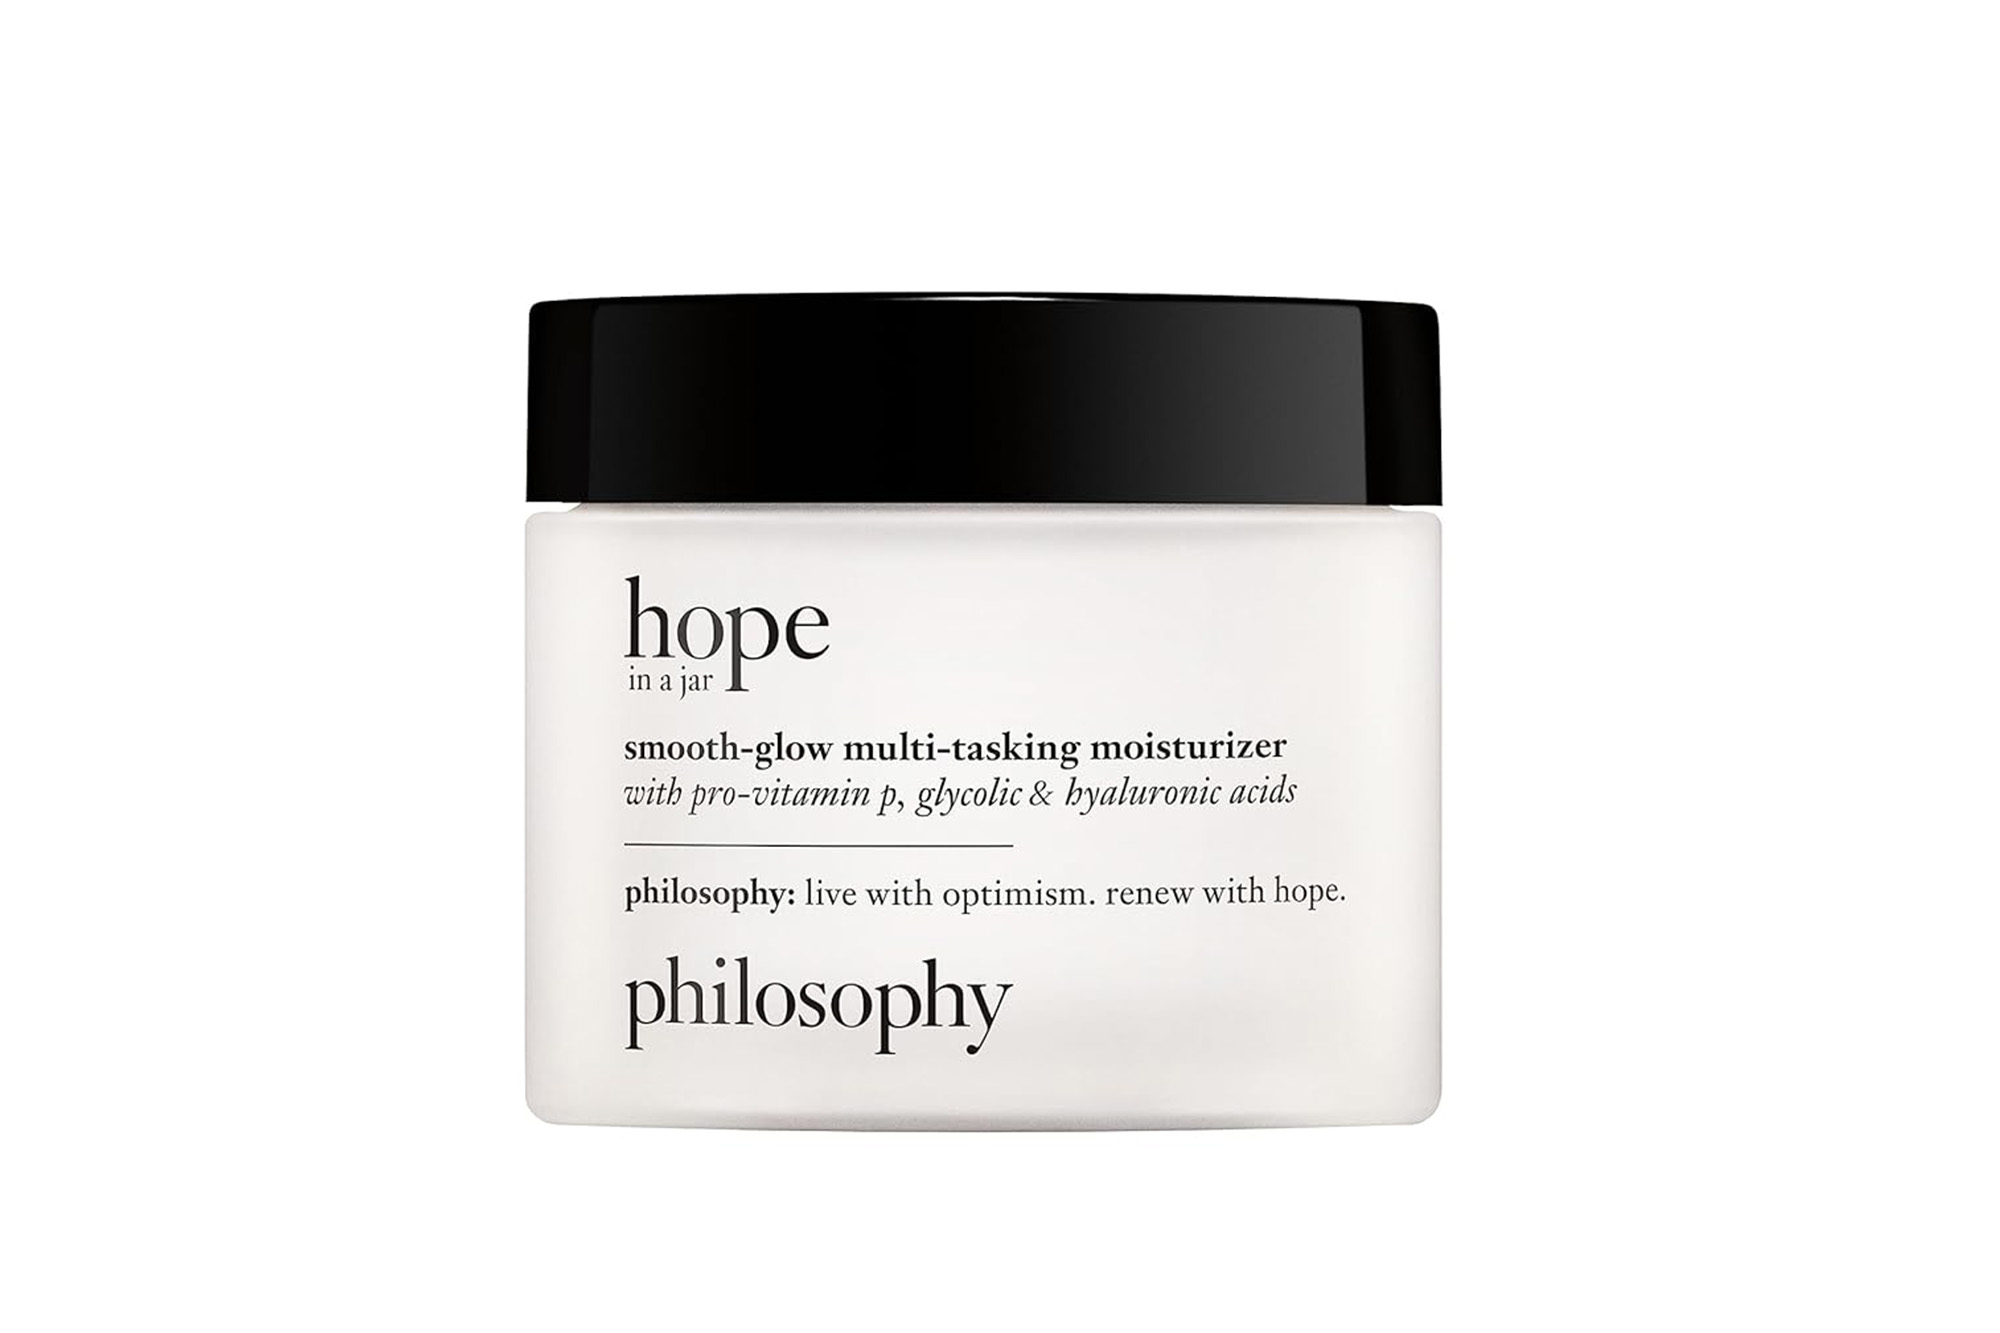 Philosophy moisturizer